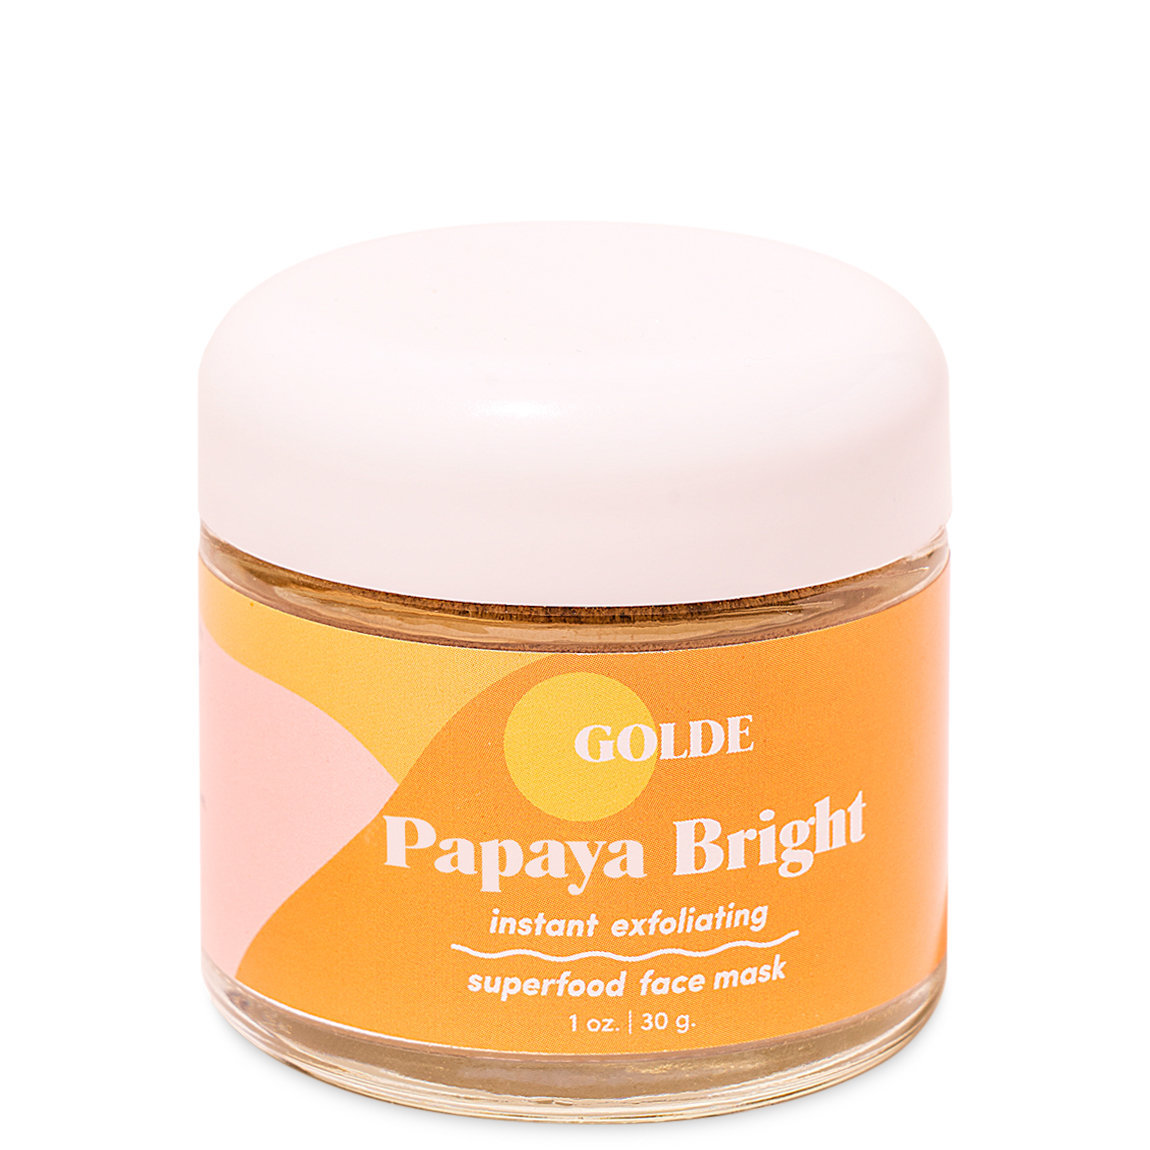 Golde Papaya Bright Face Mask alternative view 1 - product swatch.